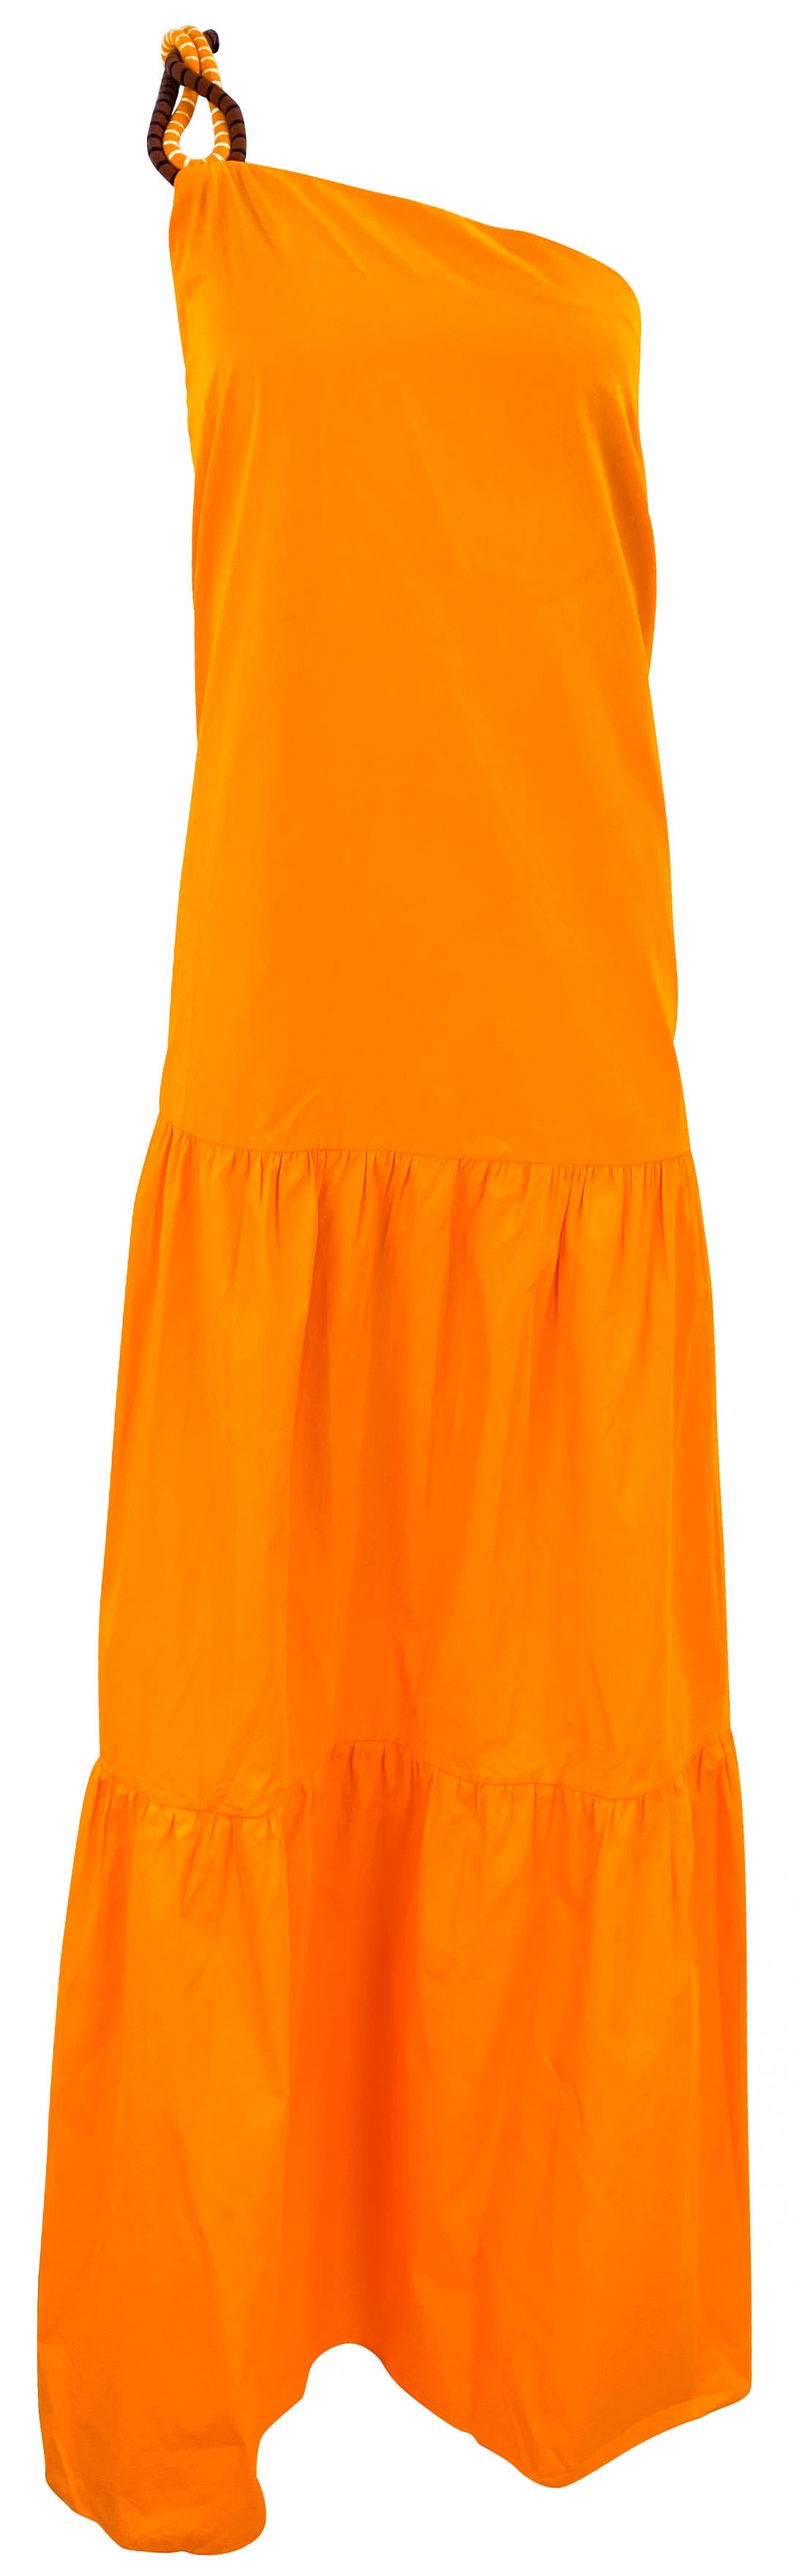 Johanna Ortiz Volcanic Dreams Maxi Dress in Orange - Discounts on Johanna Ortiz at UAL